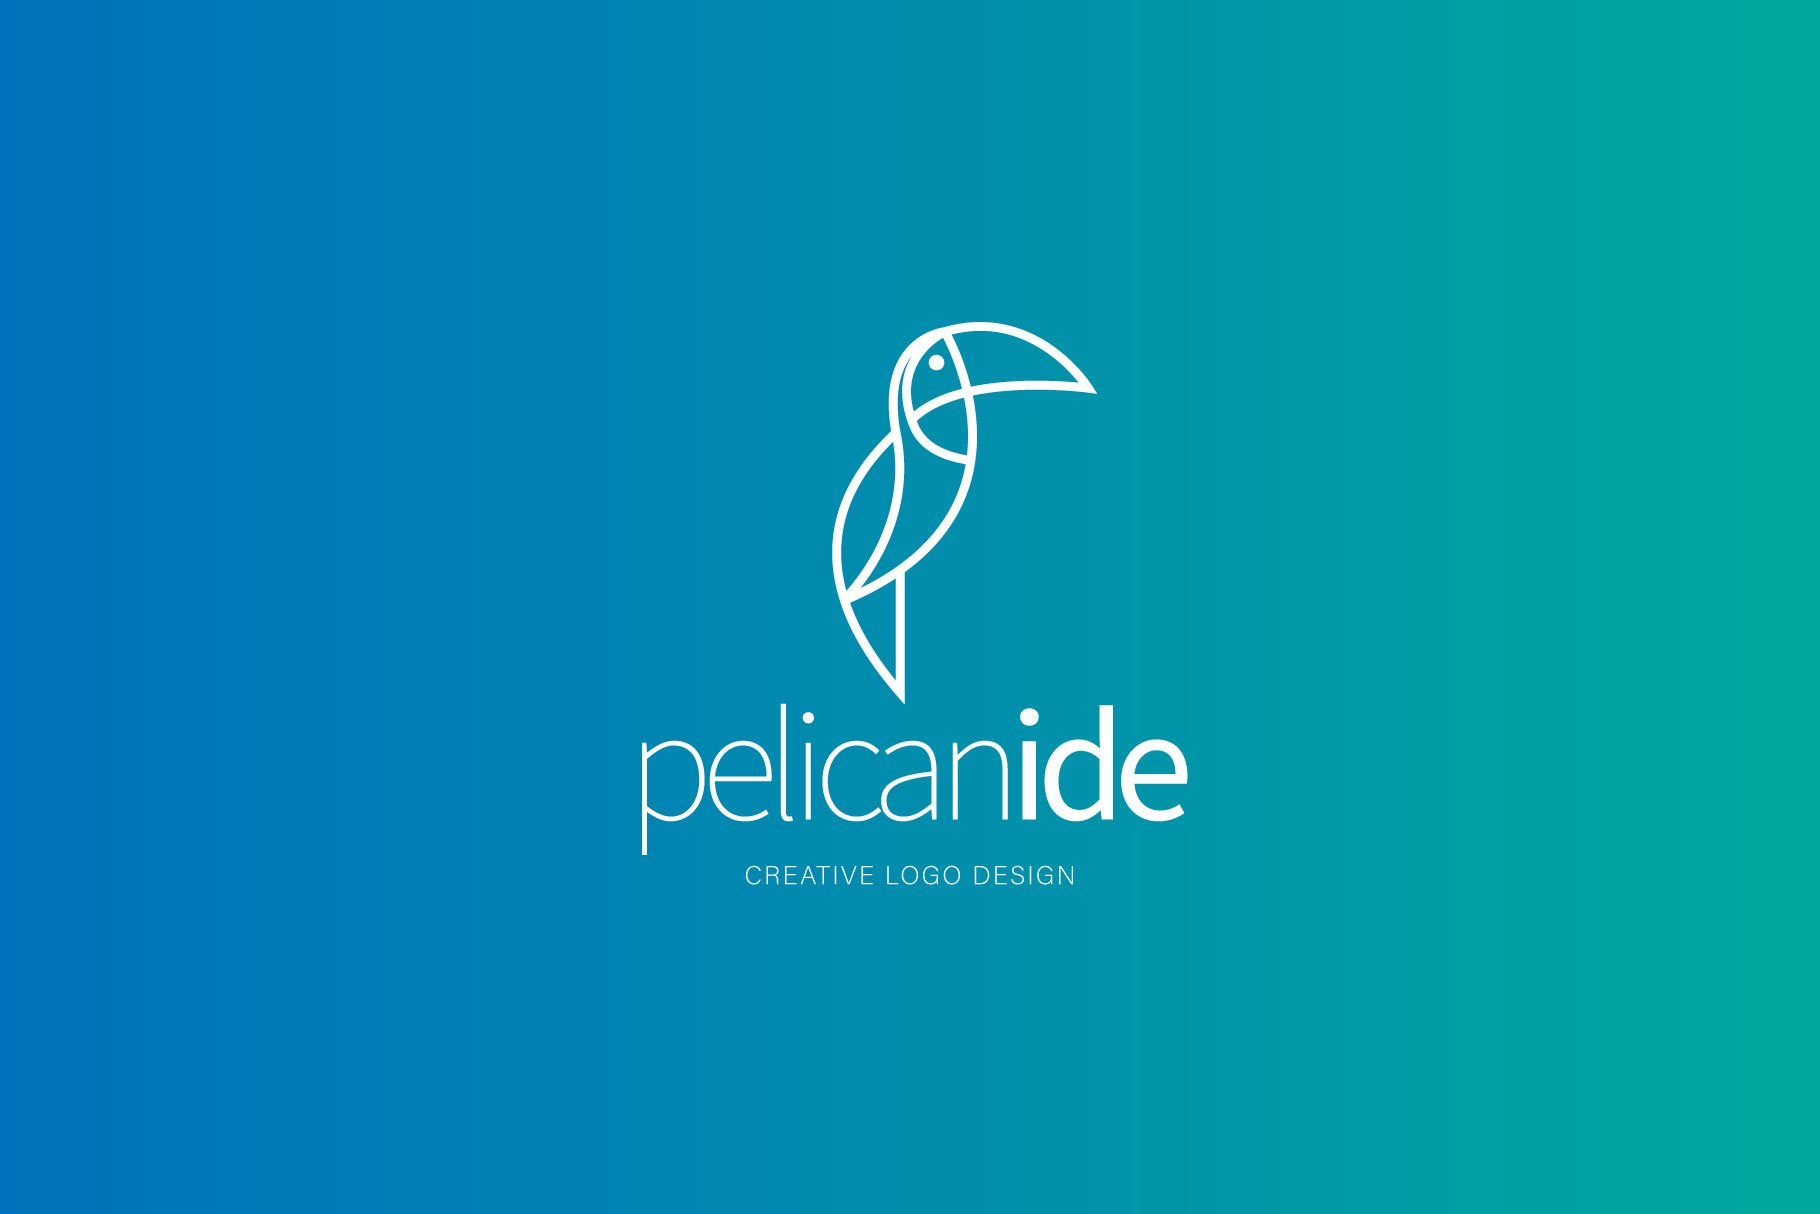 Pelican logo preview image.